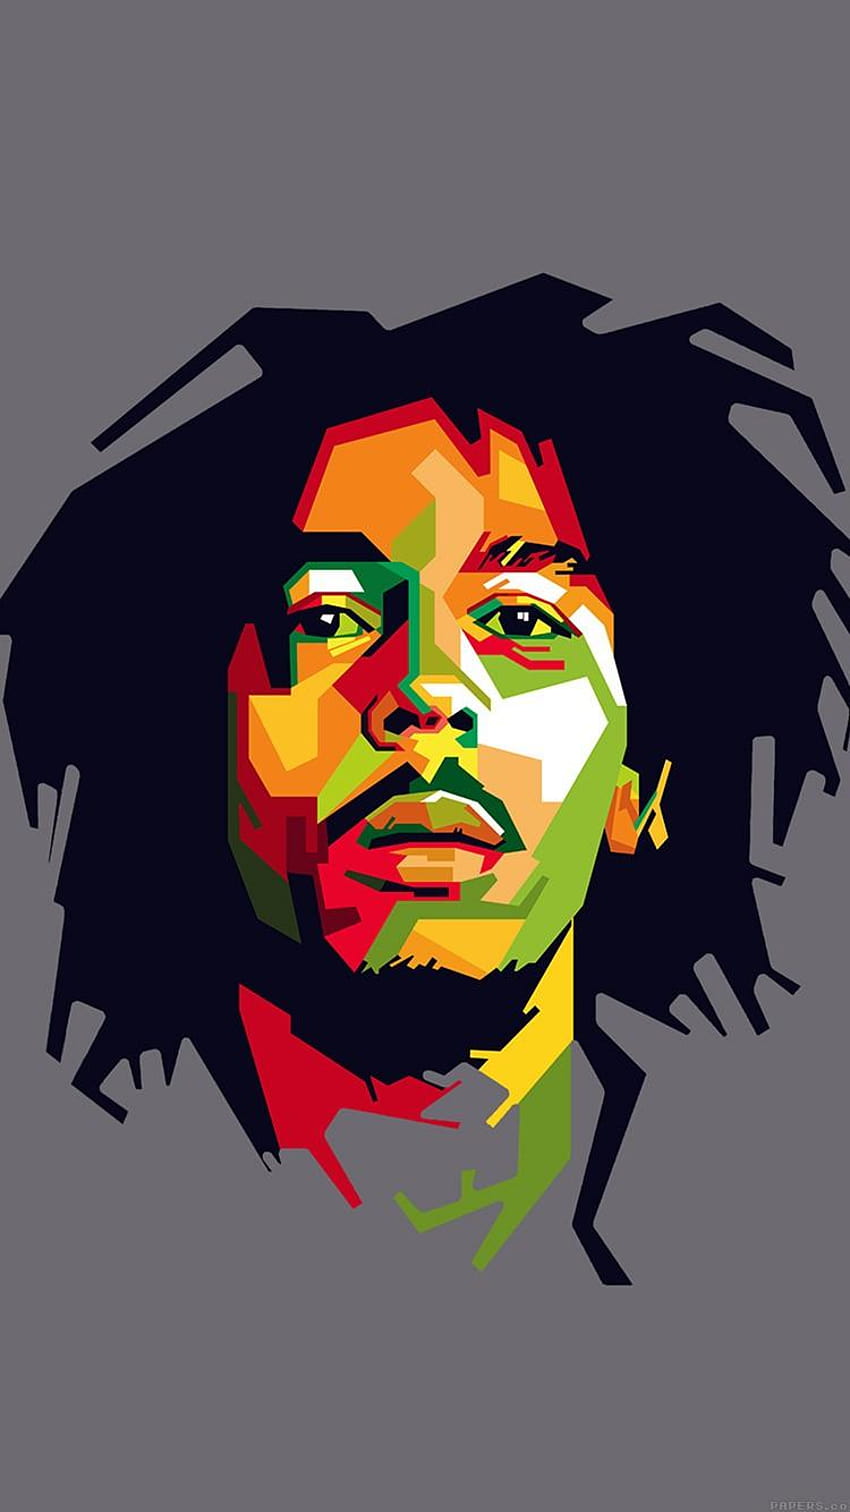 Bob Marley Flag Logo Sticker | Hot Topic